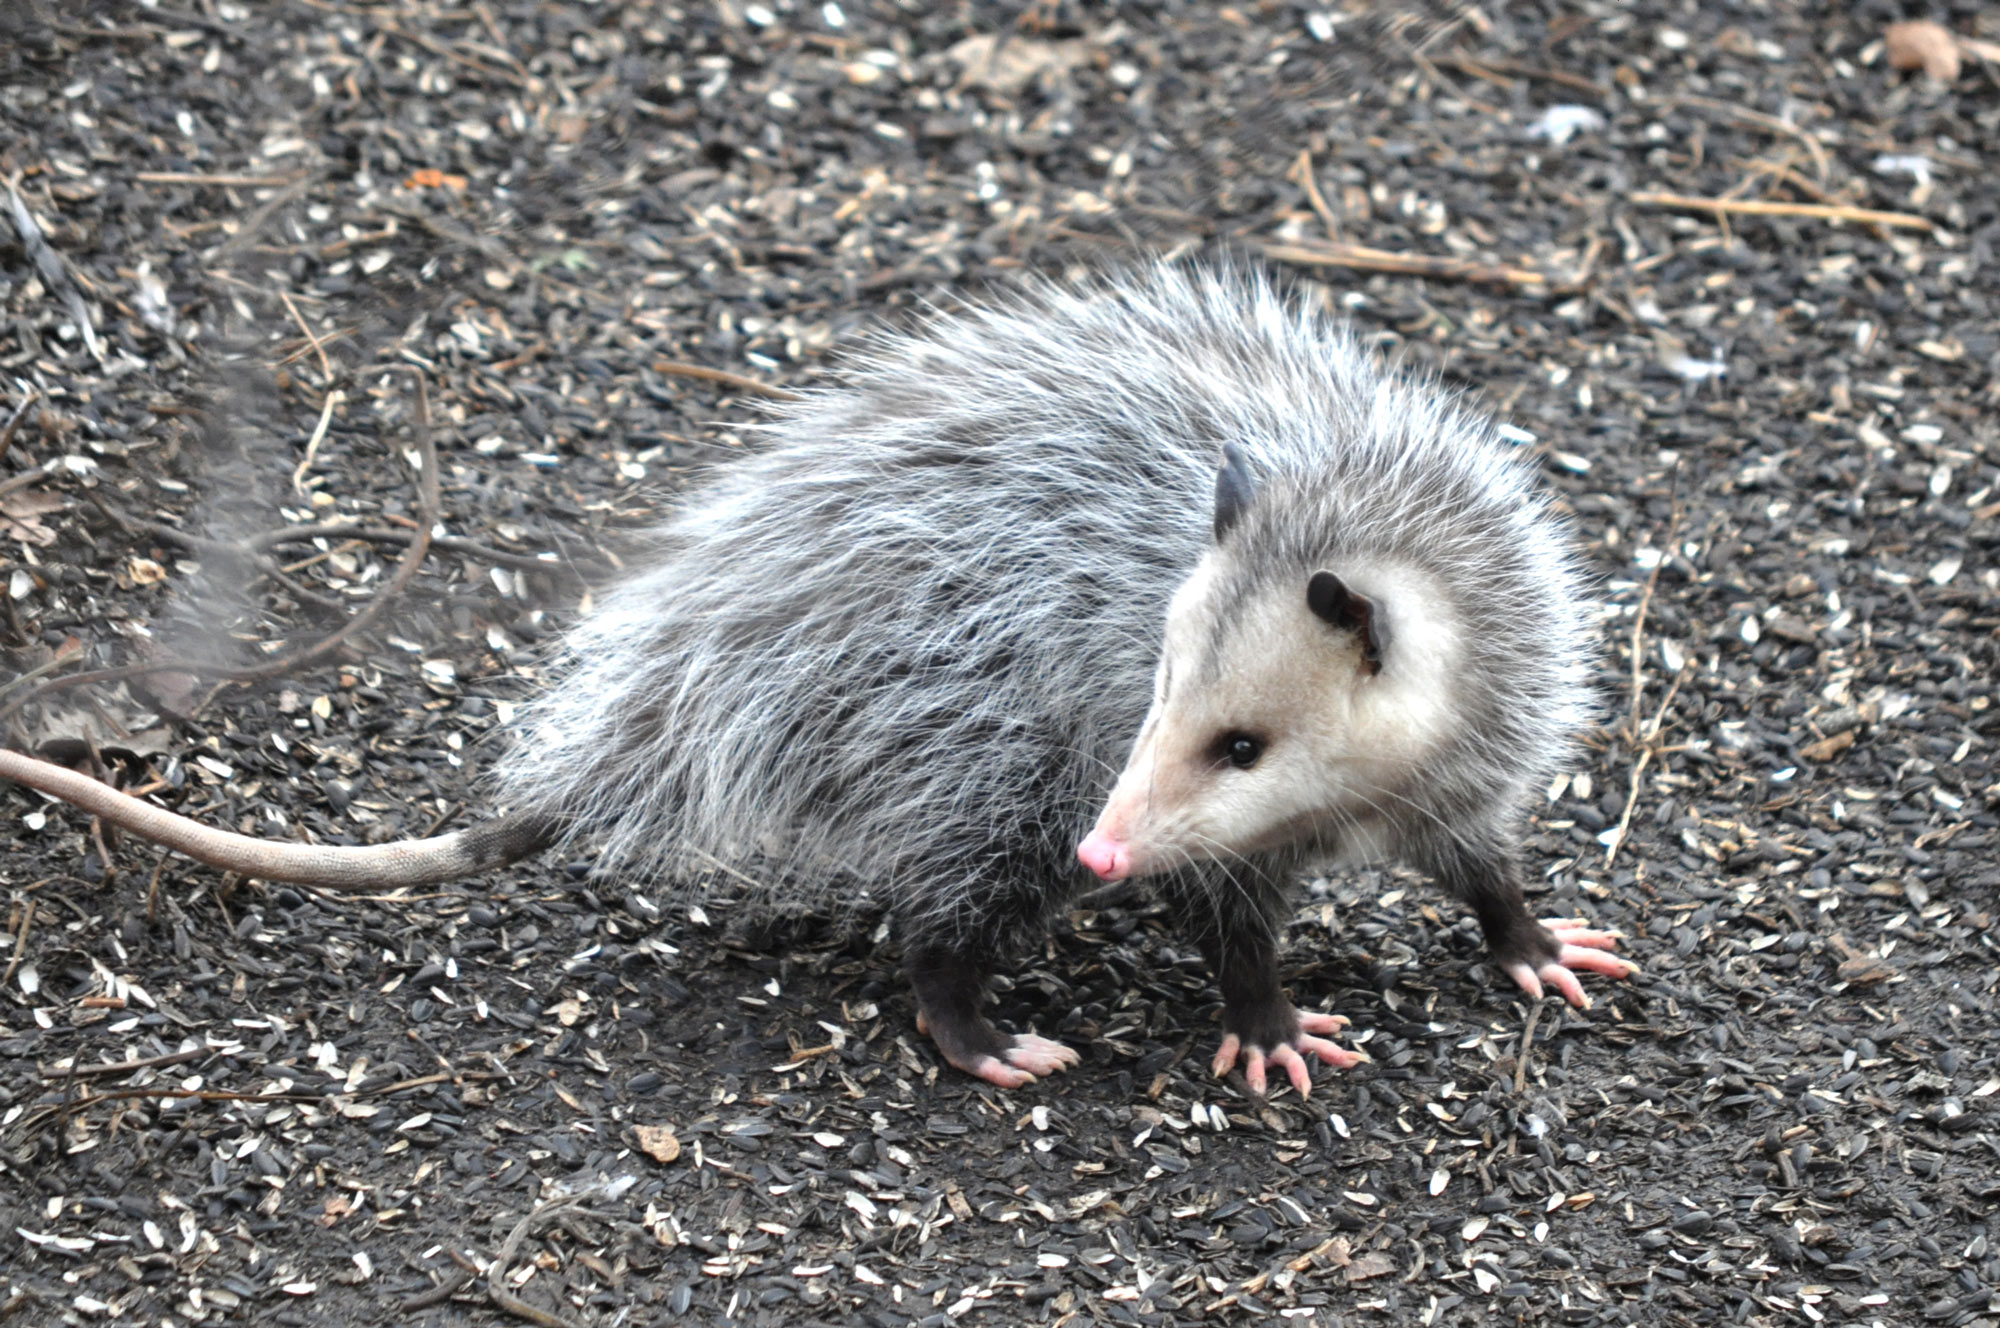 An opossum on the ground